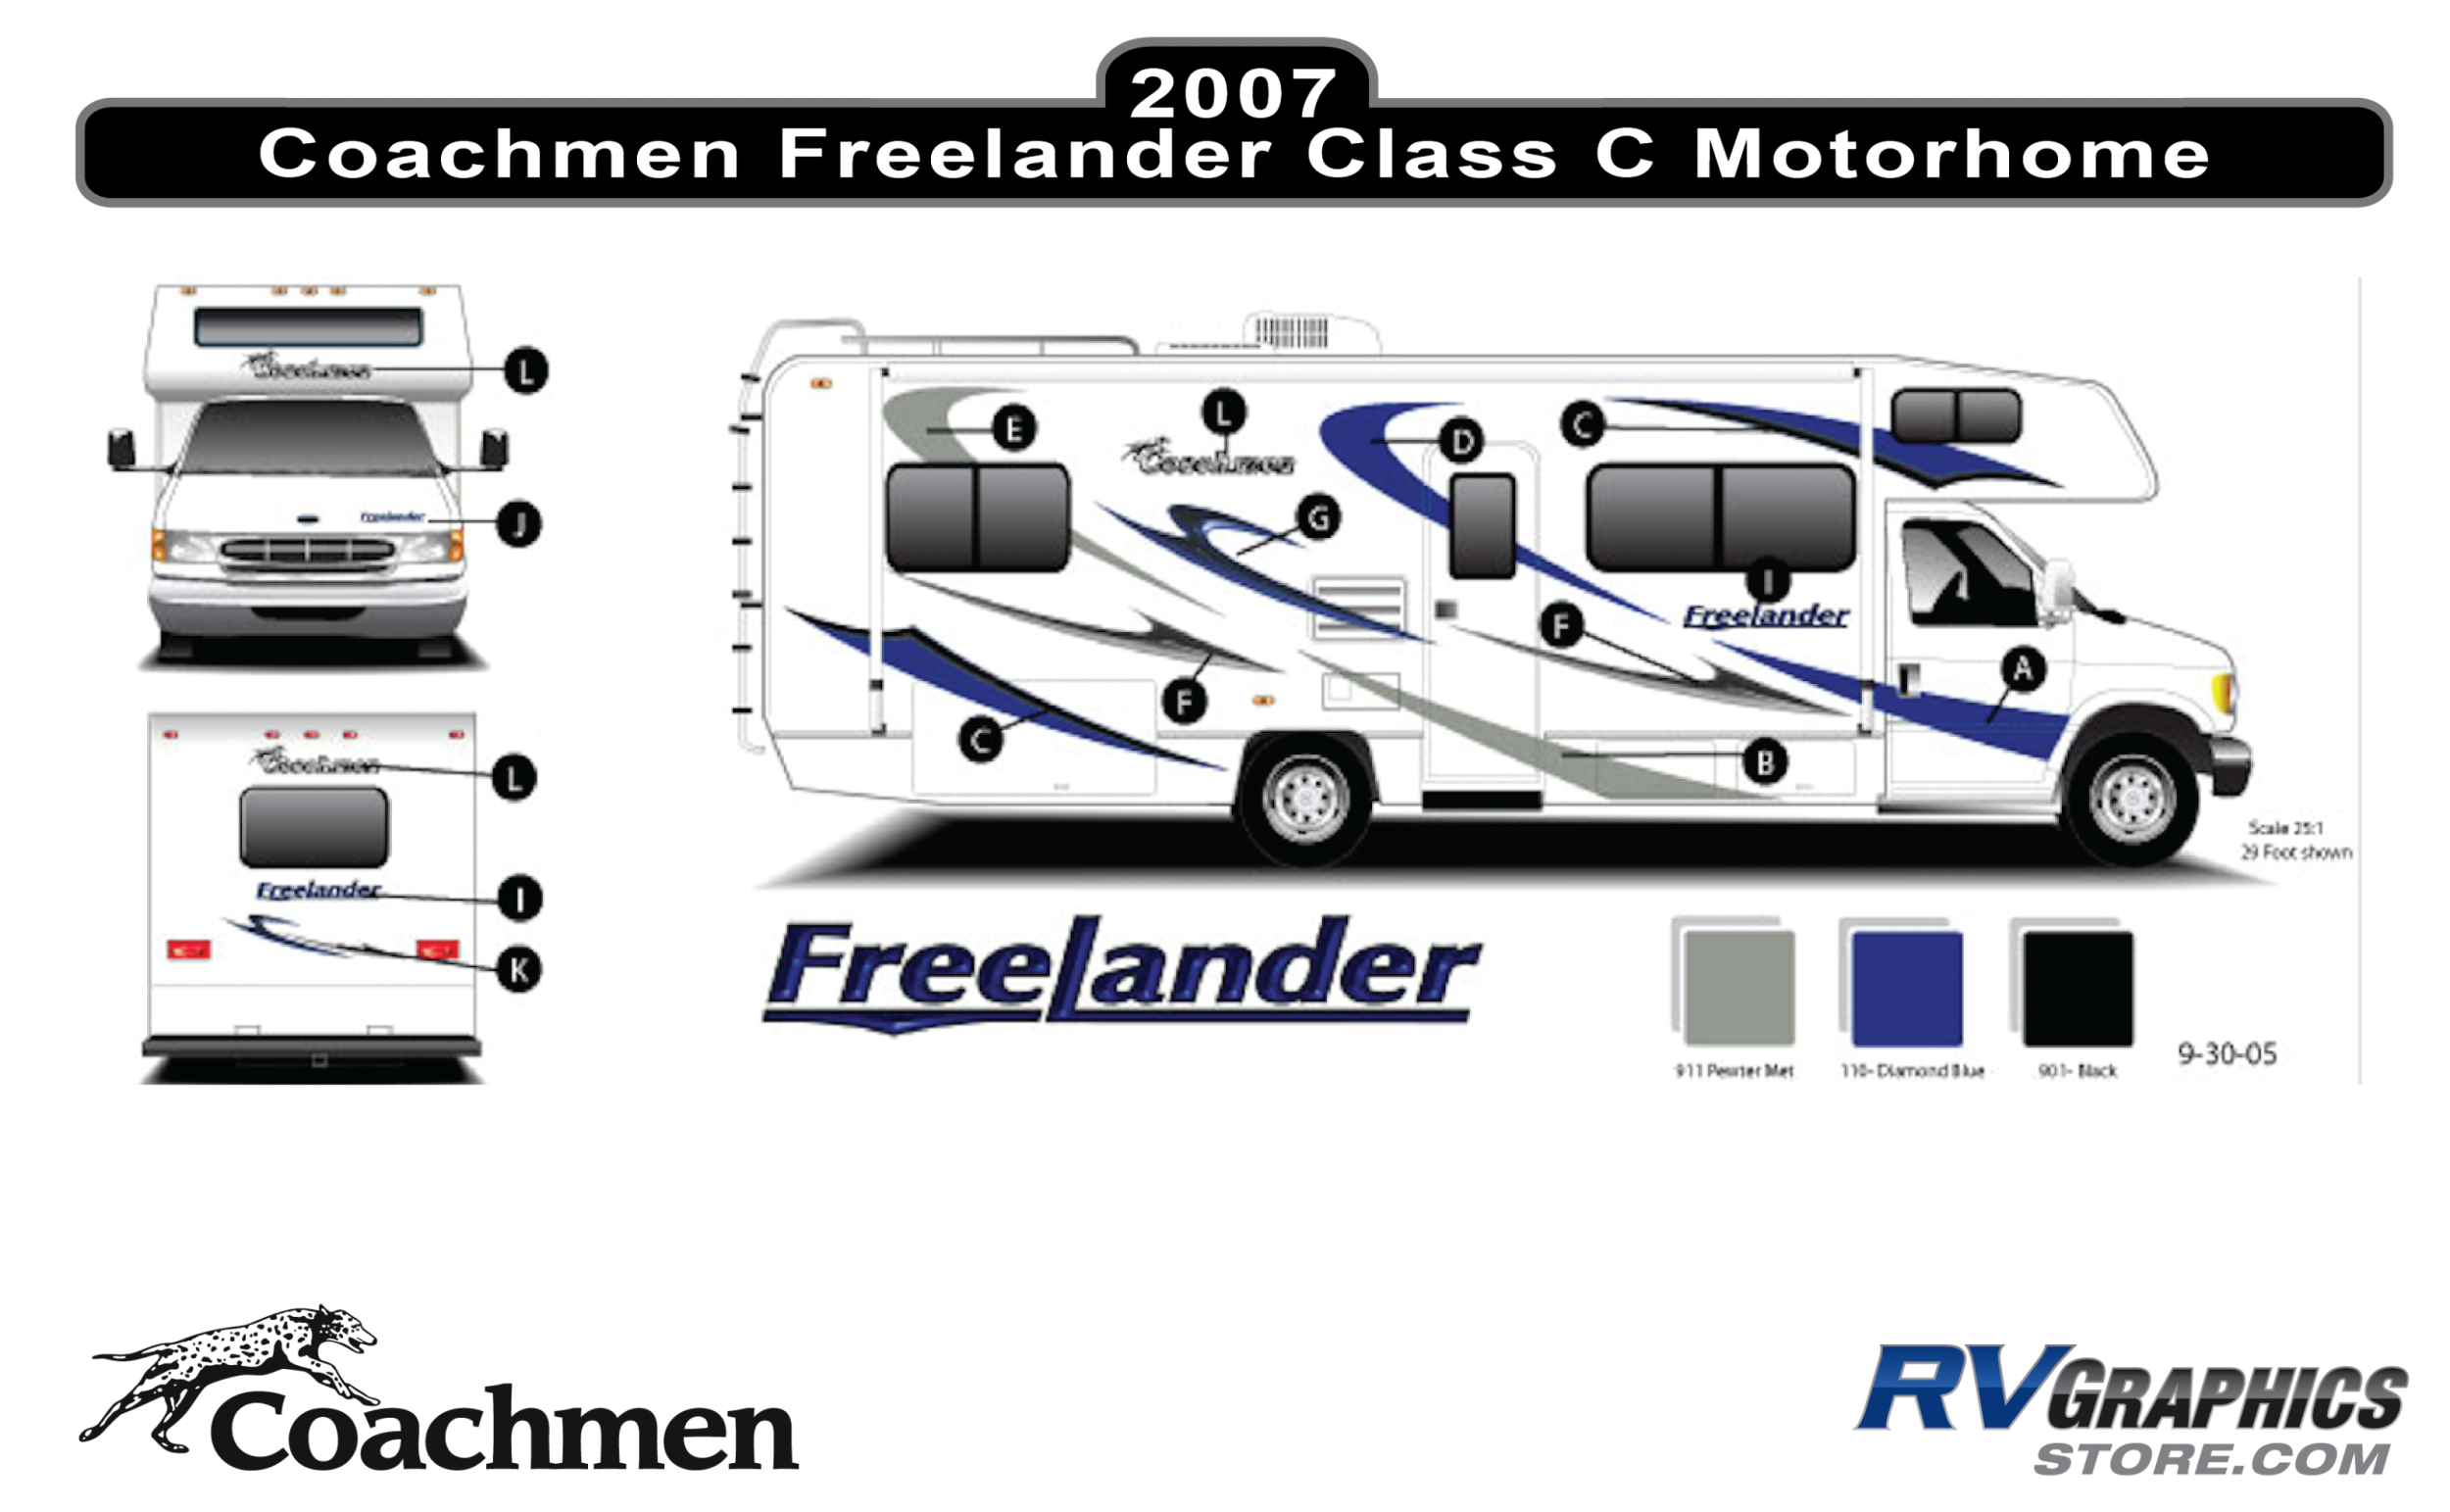 Freelander - 2007 Freelander Class C Motorhome